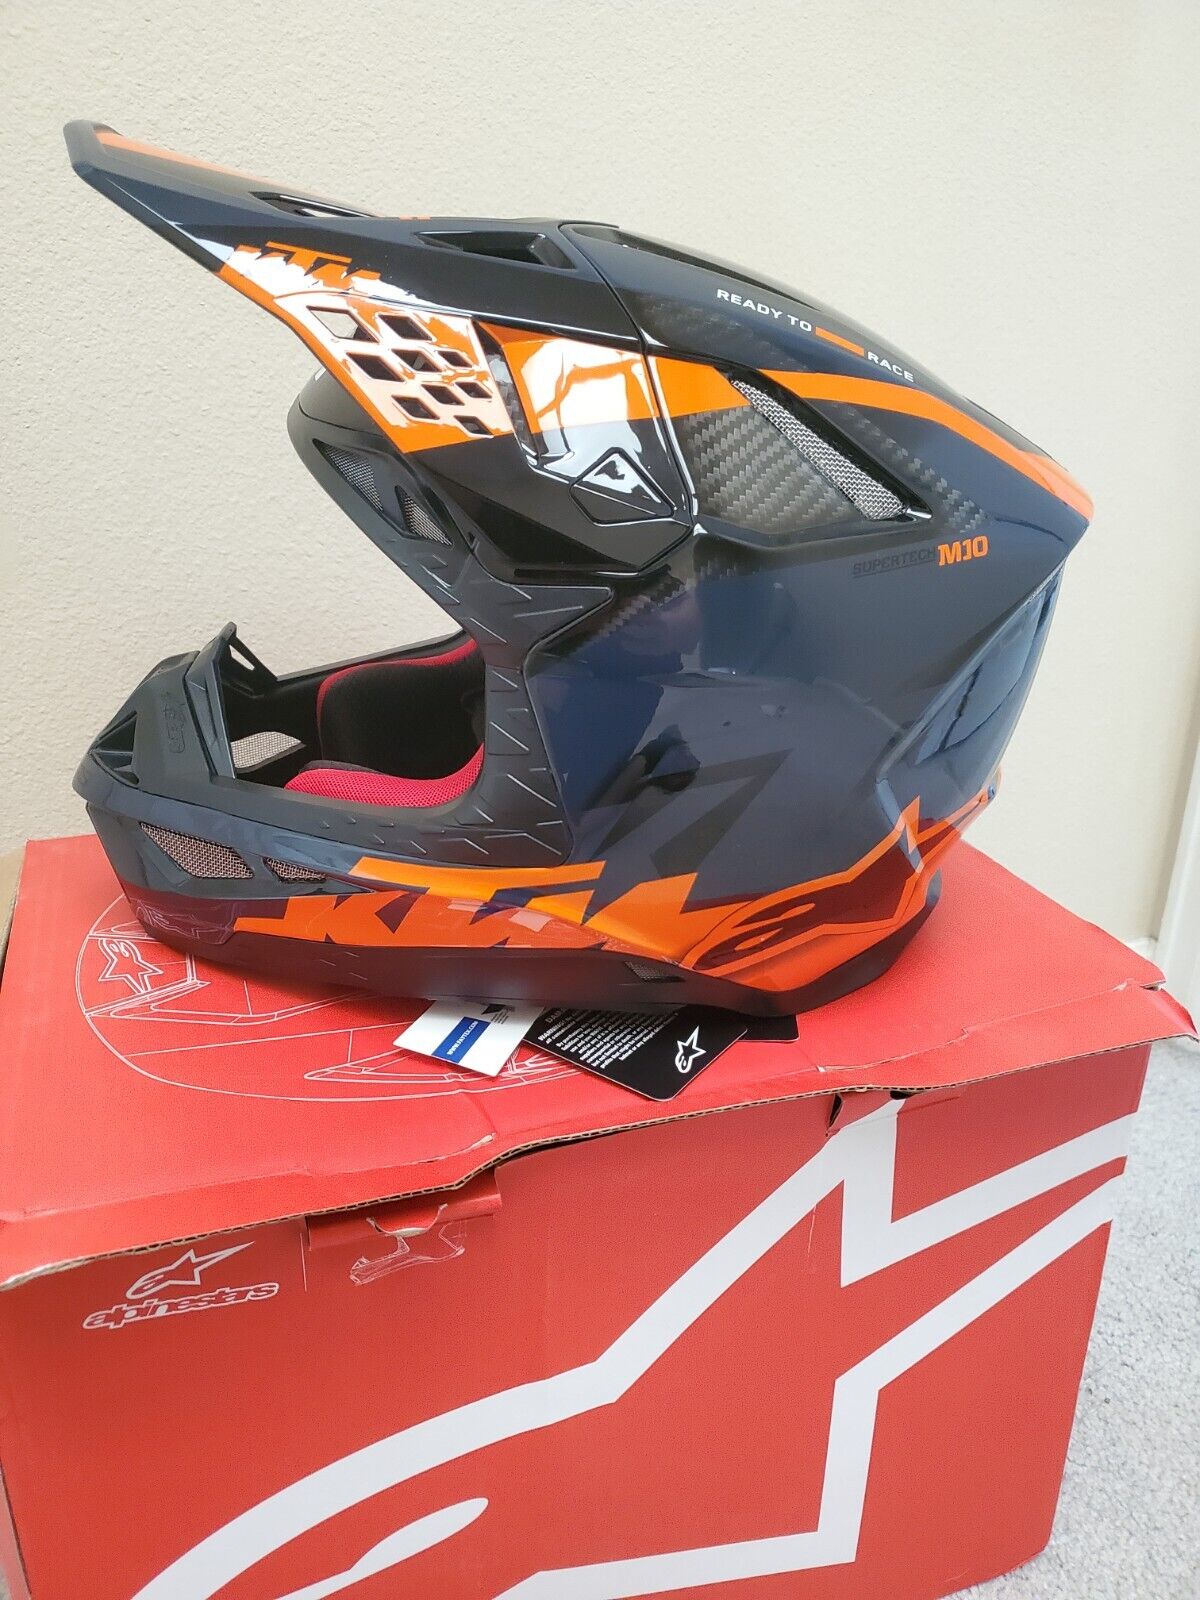 Ktm Alpinestars Supertech M10 helmet - Large